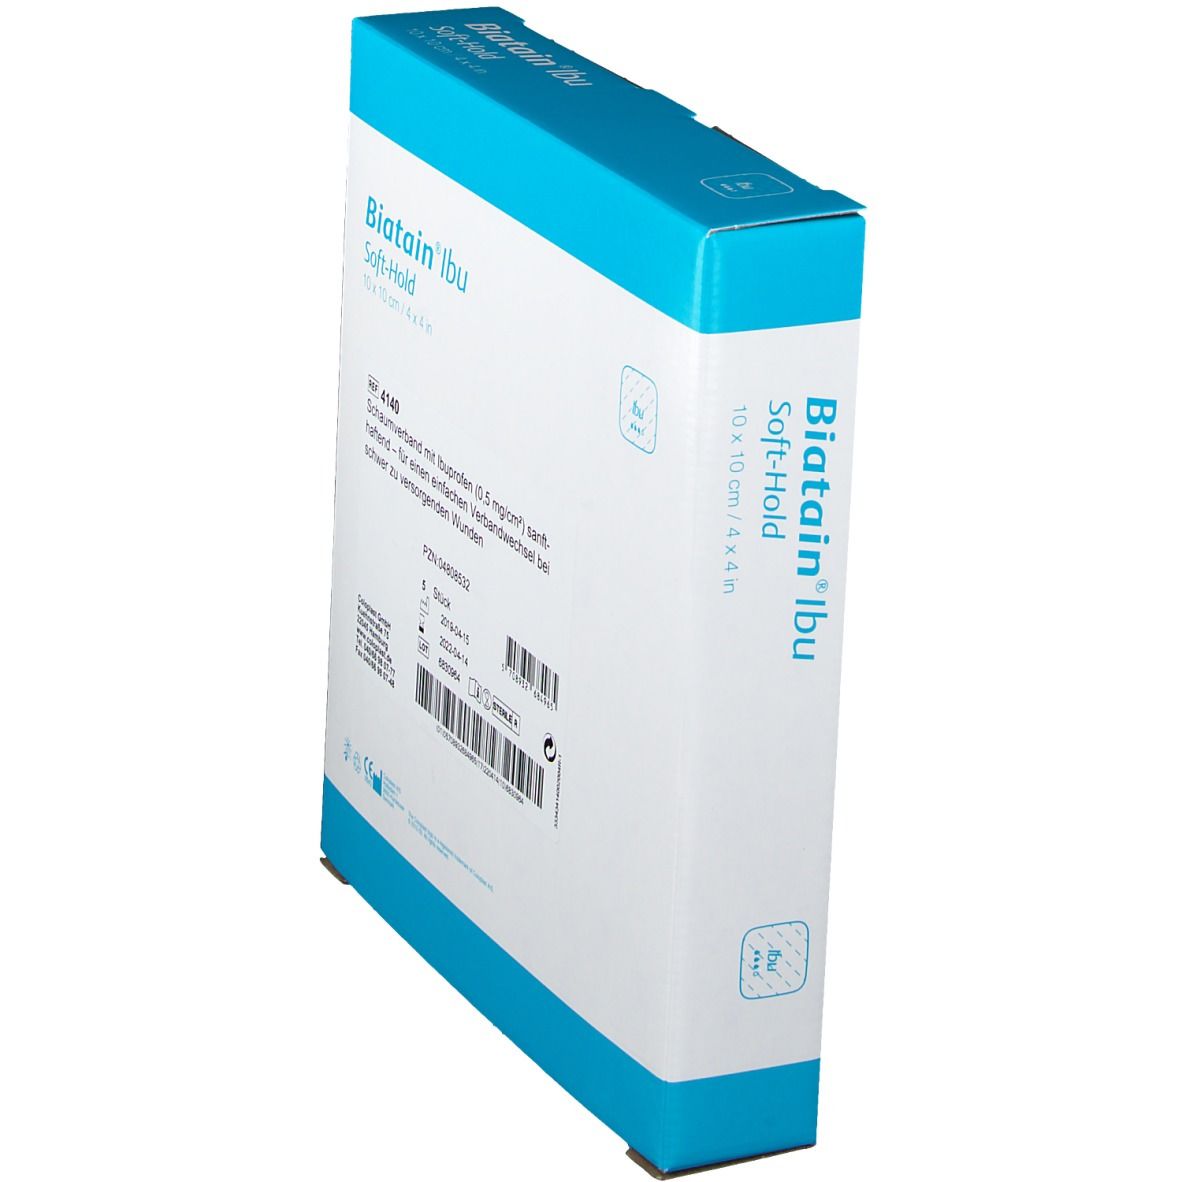 BIATAIN® Ibu Schaumverband mit Ibuprofen sanft-haftend 10x10cm